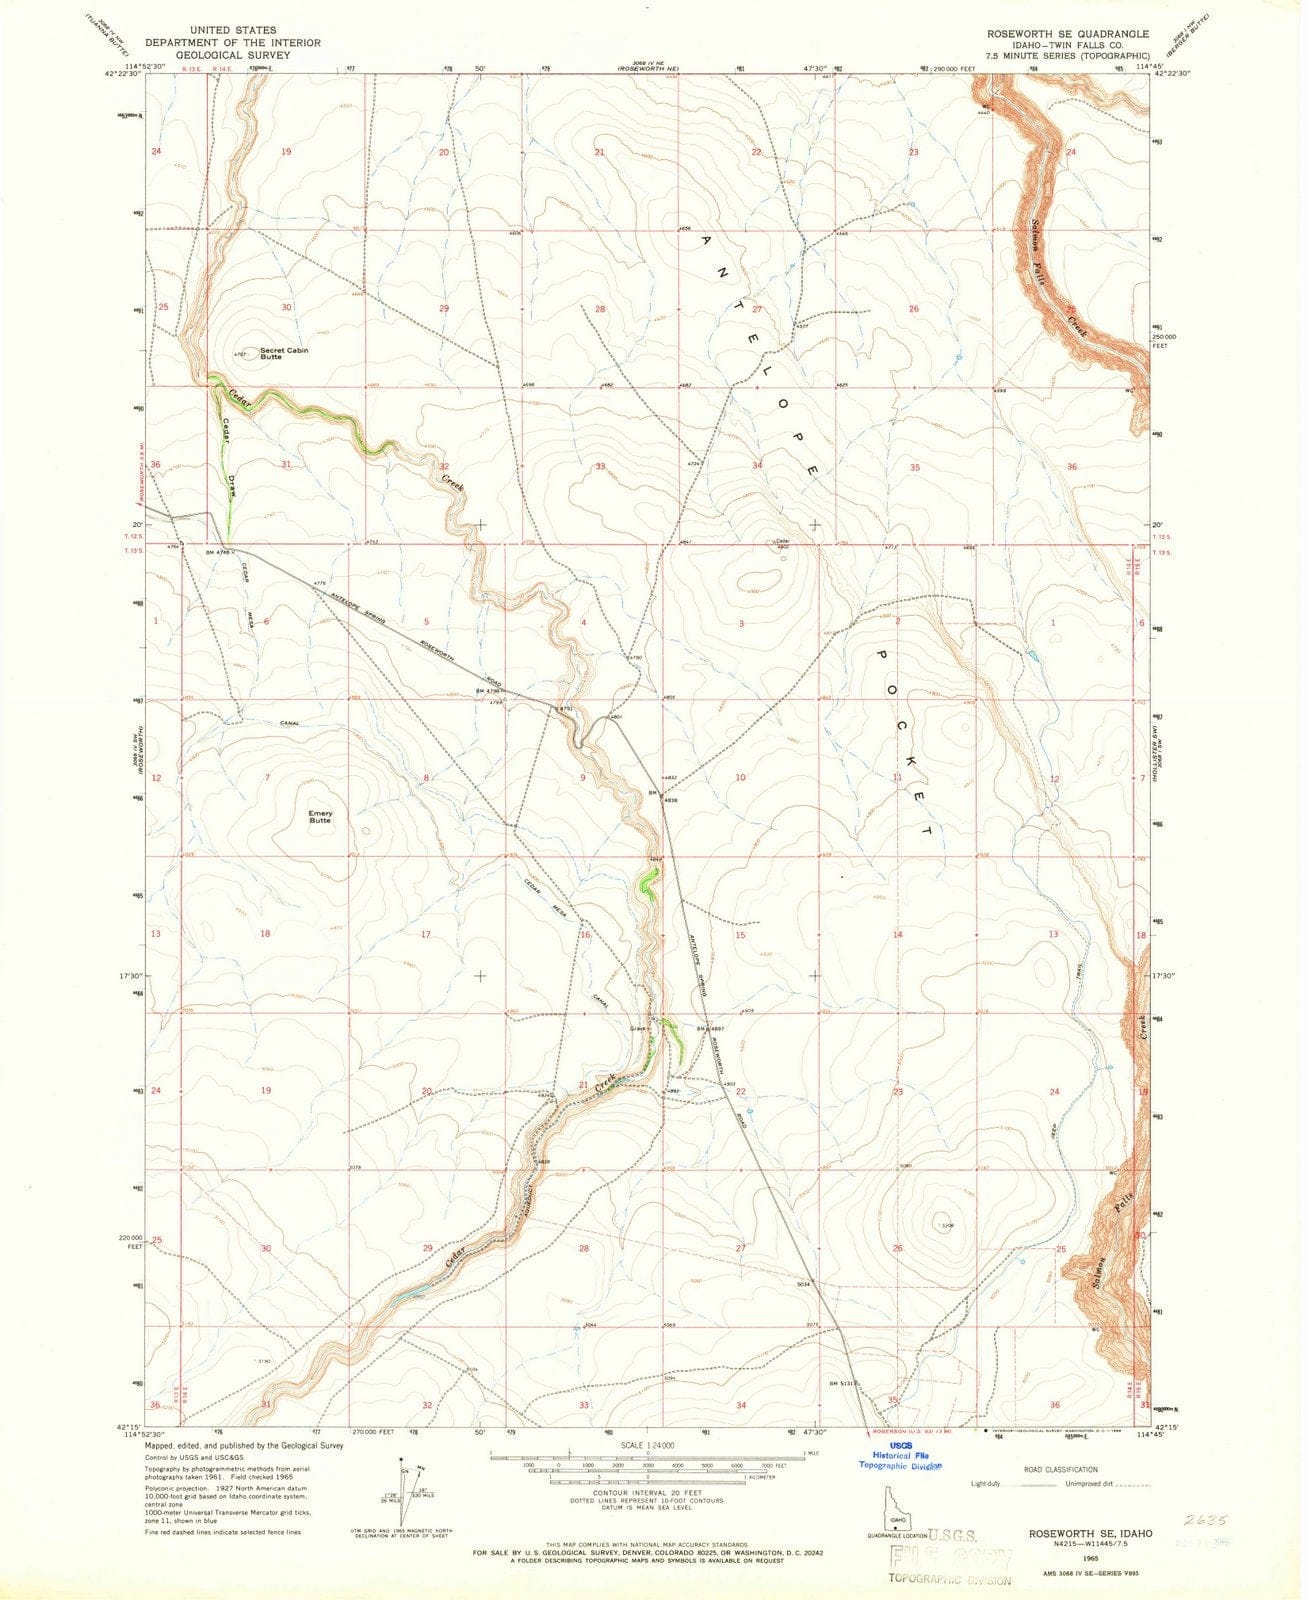 1965 Roseworth, ID - Idaho - USGS Topographic Map v2